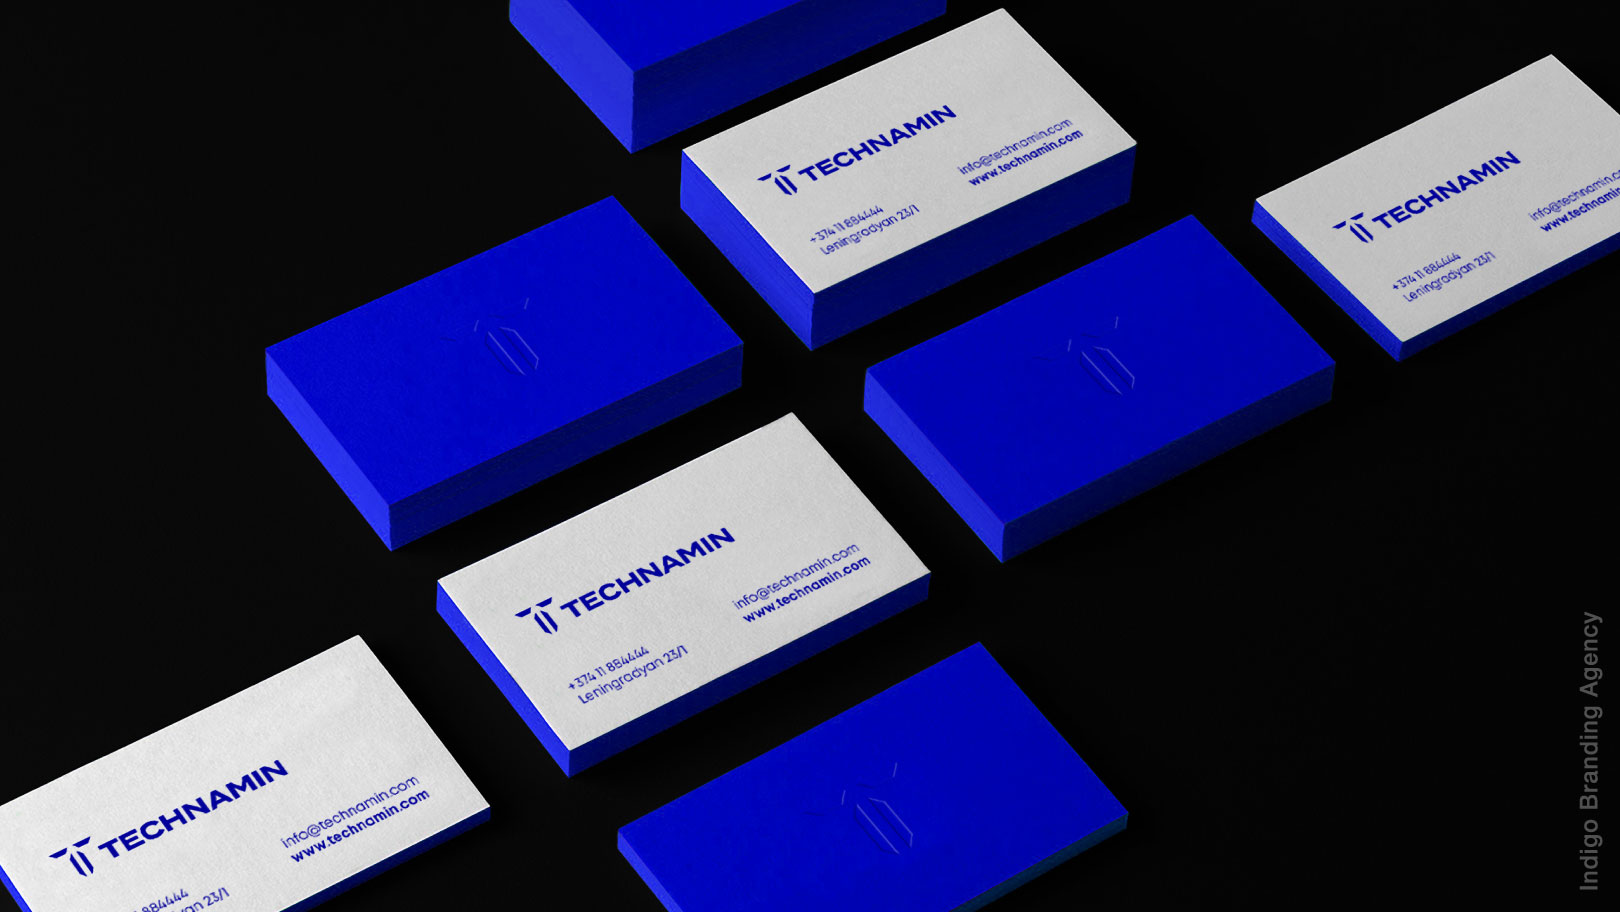 technamin betting and saas provider naming branding and logo design by Indigo branding лого дизайн брендинг нейминг